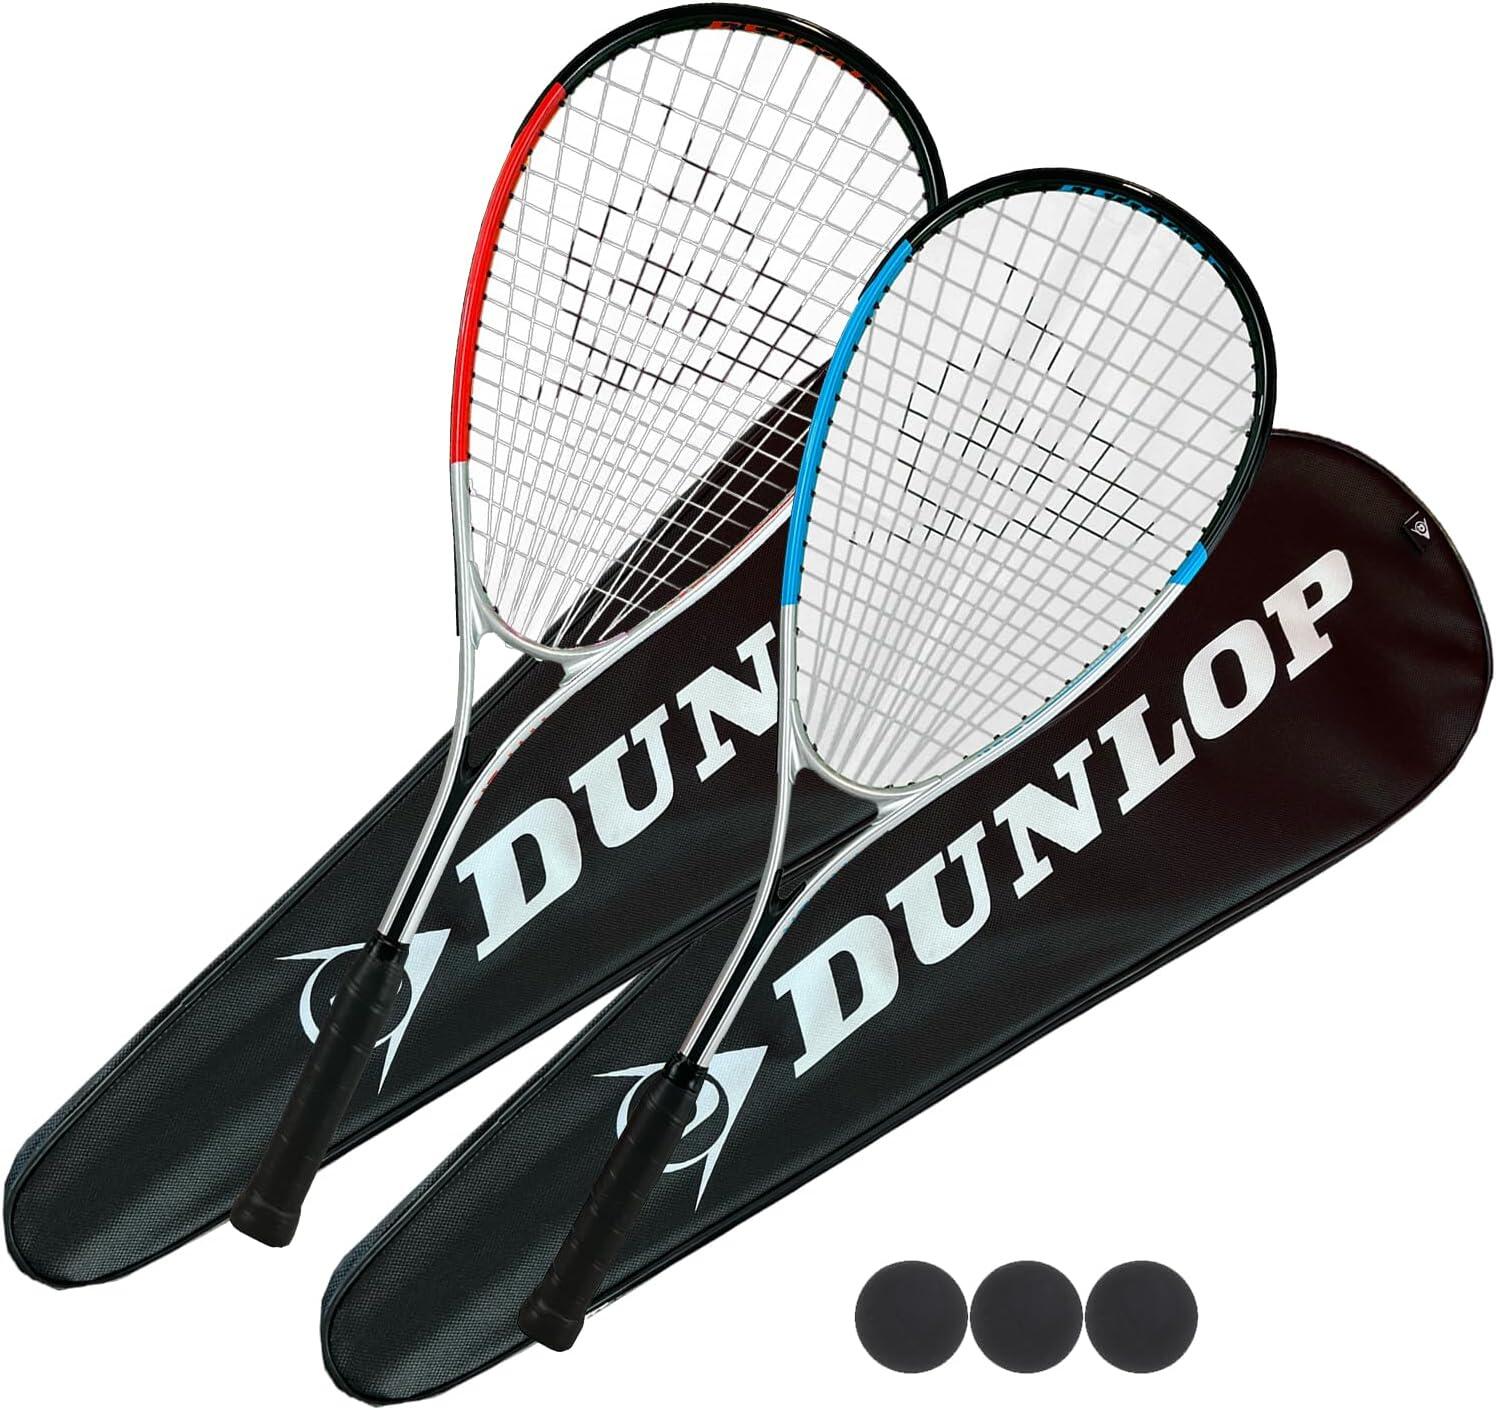 DUNLOP Dunlop Hyper Squash Racket Deluxe Squash Set, inc Full Length Protective Covers